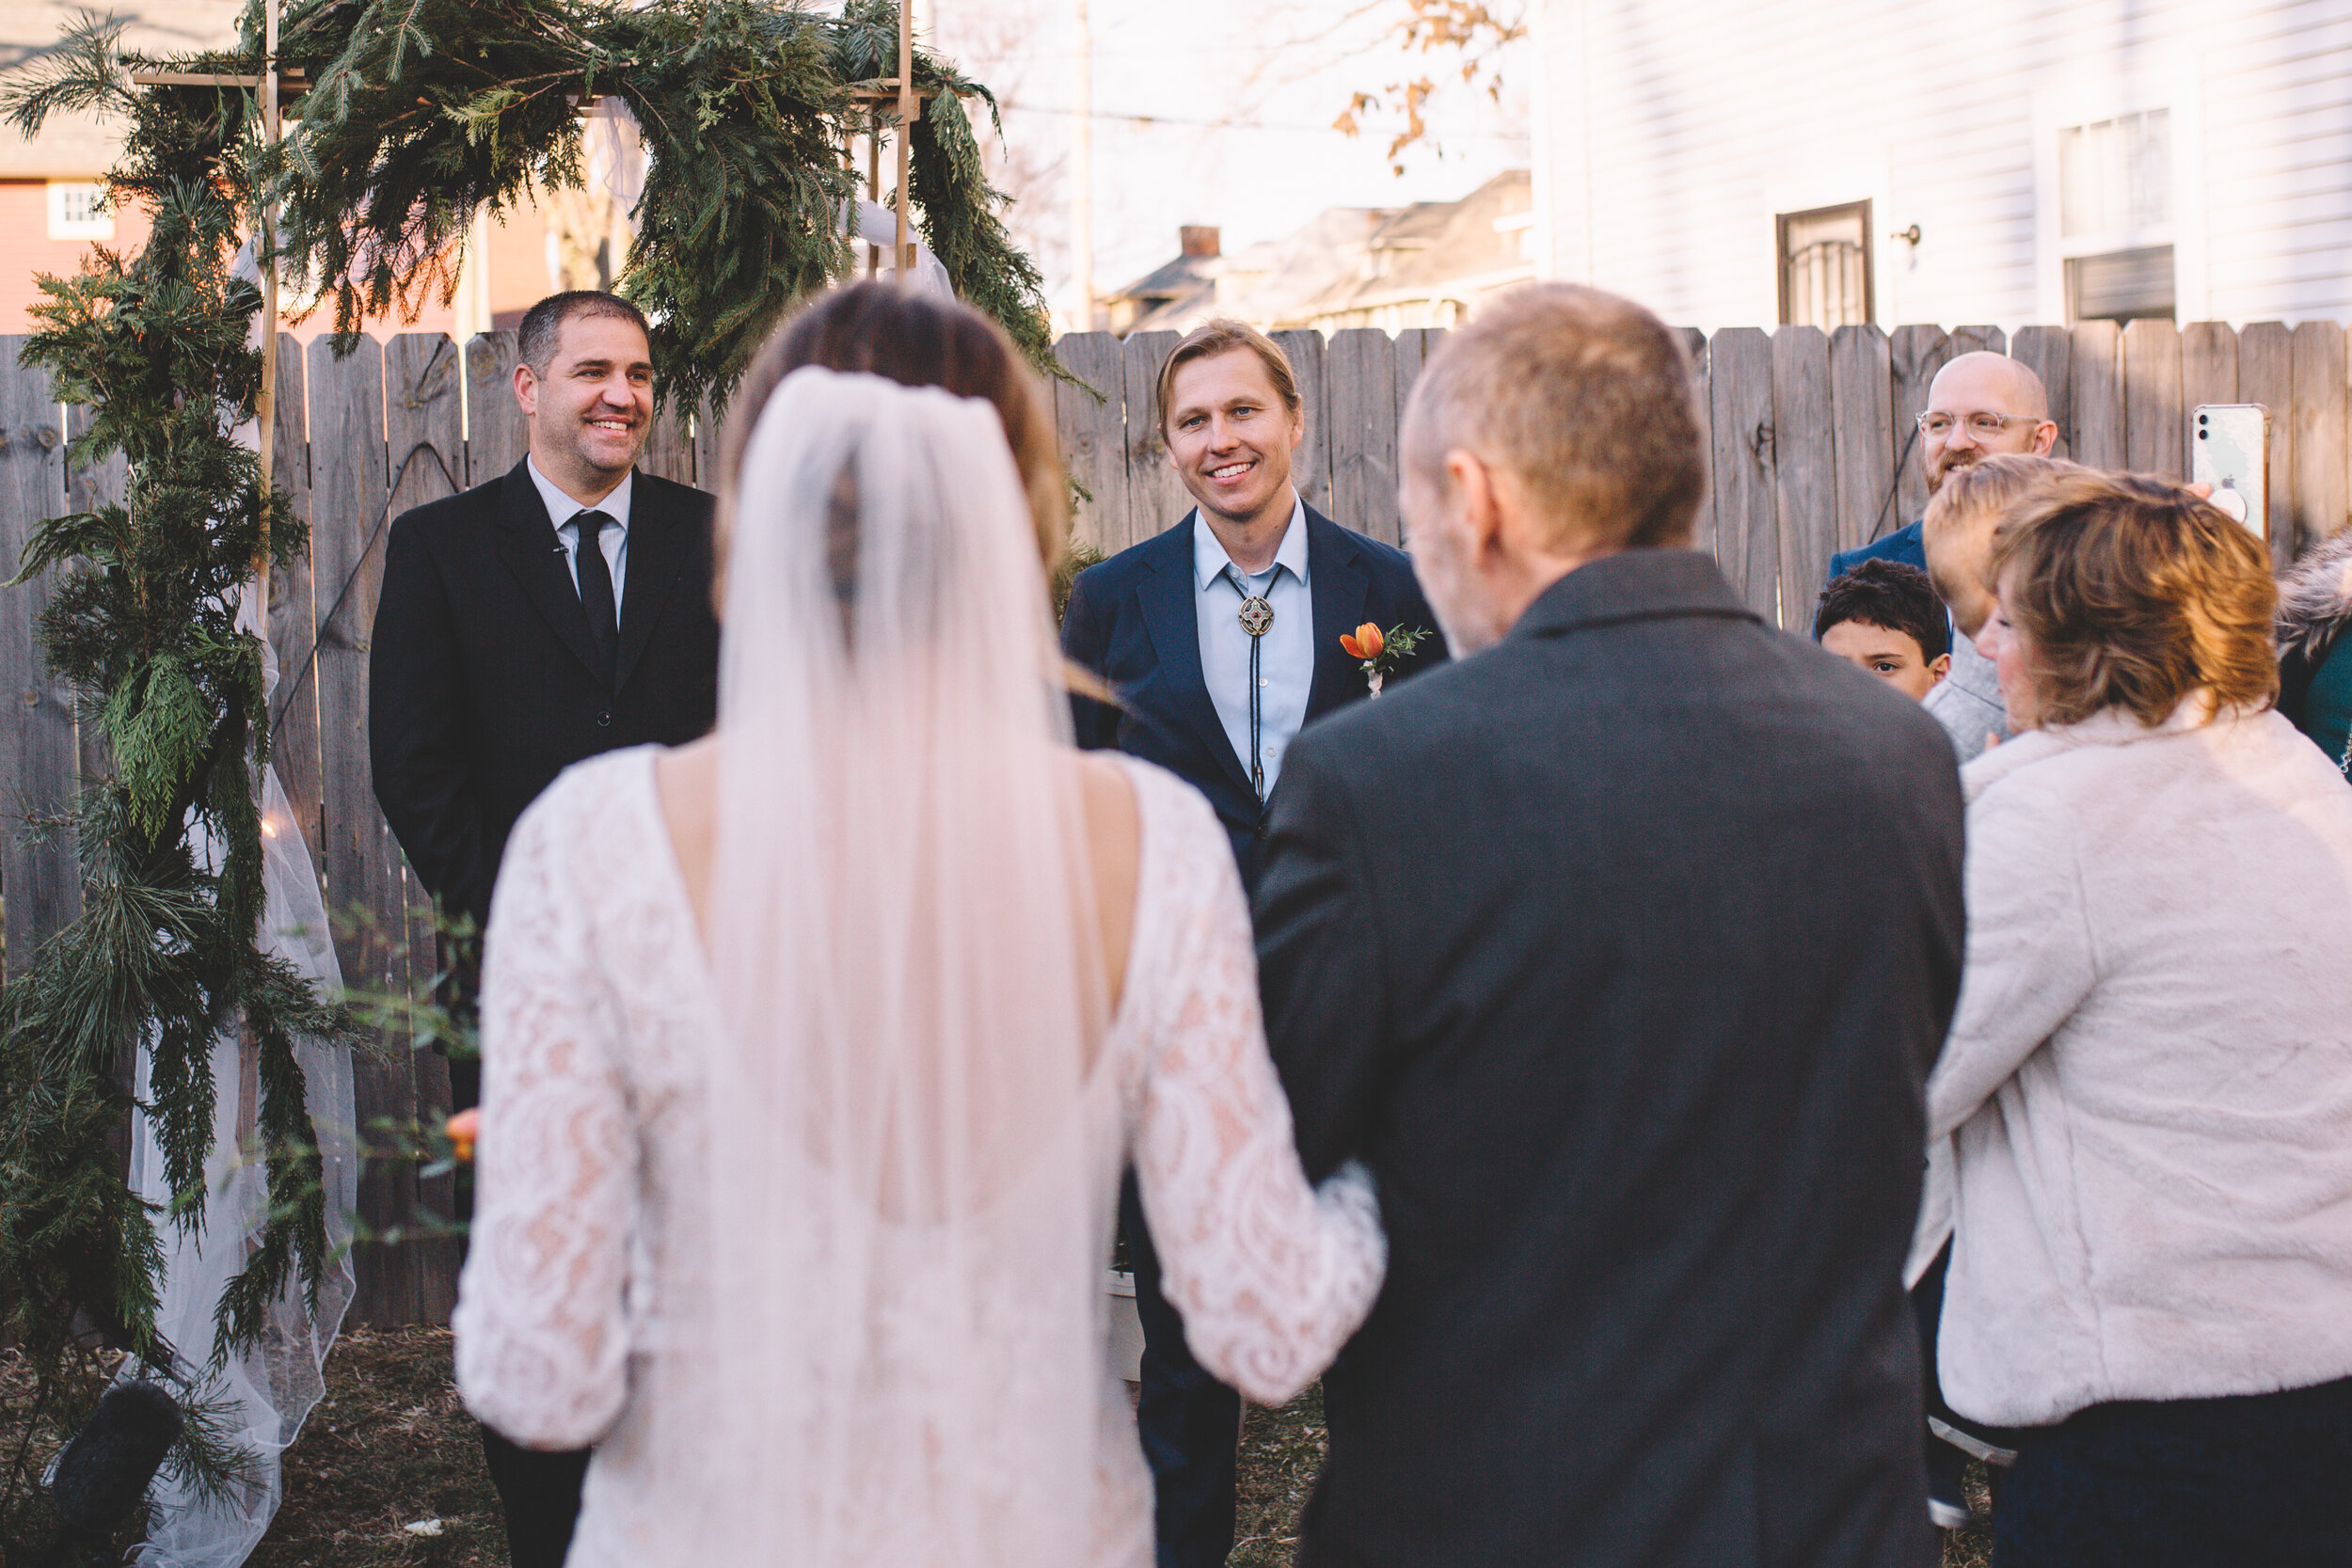 Indianapolis Backyard Wedding by Again We Say Rejoice Photography (23 of 55).jpg